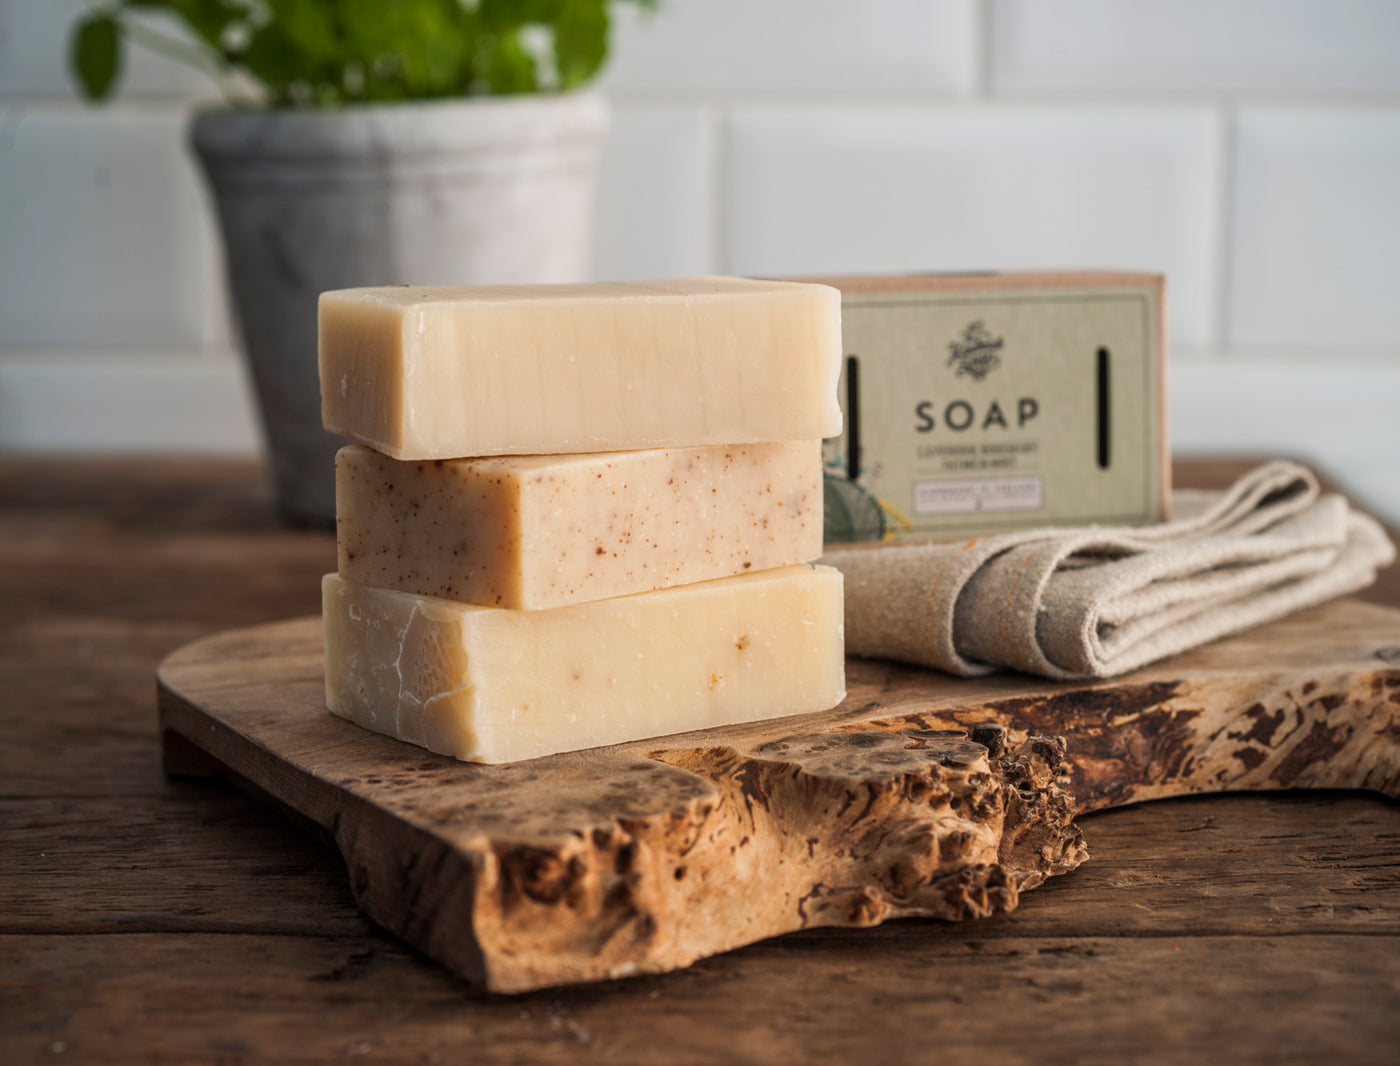 The Handmade Soap Company Soap Bar - Lemongrass & Cedarwood